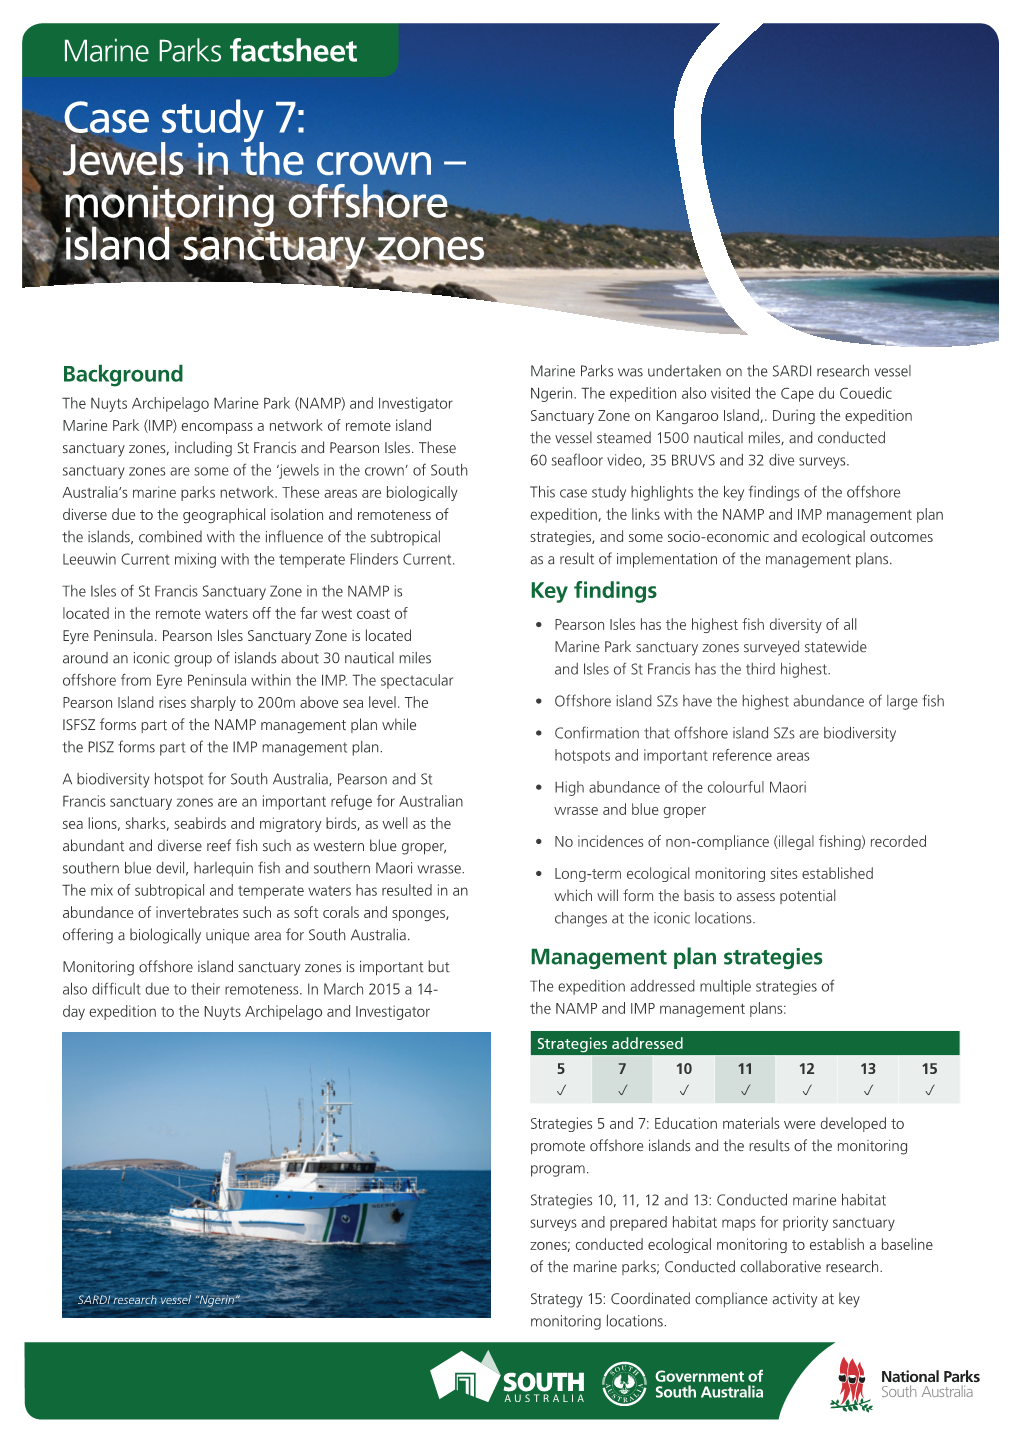 Monitoring Offshore Island Sanctuary Zones